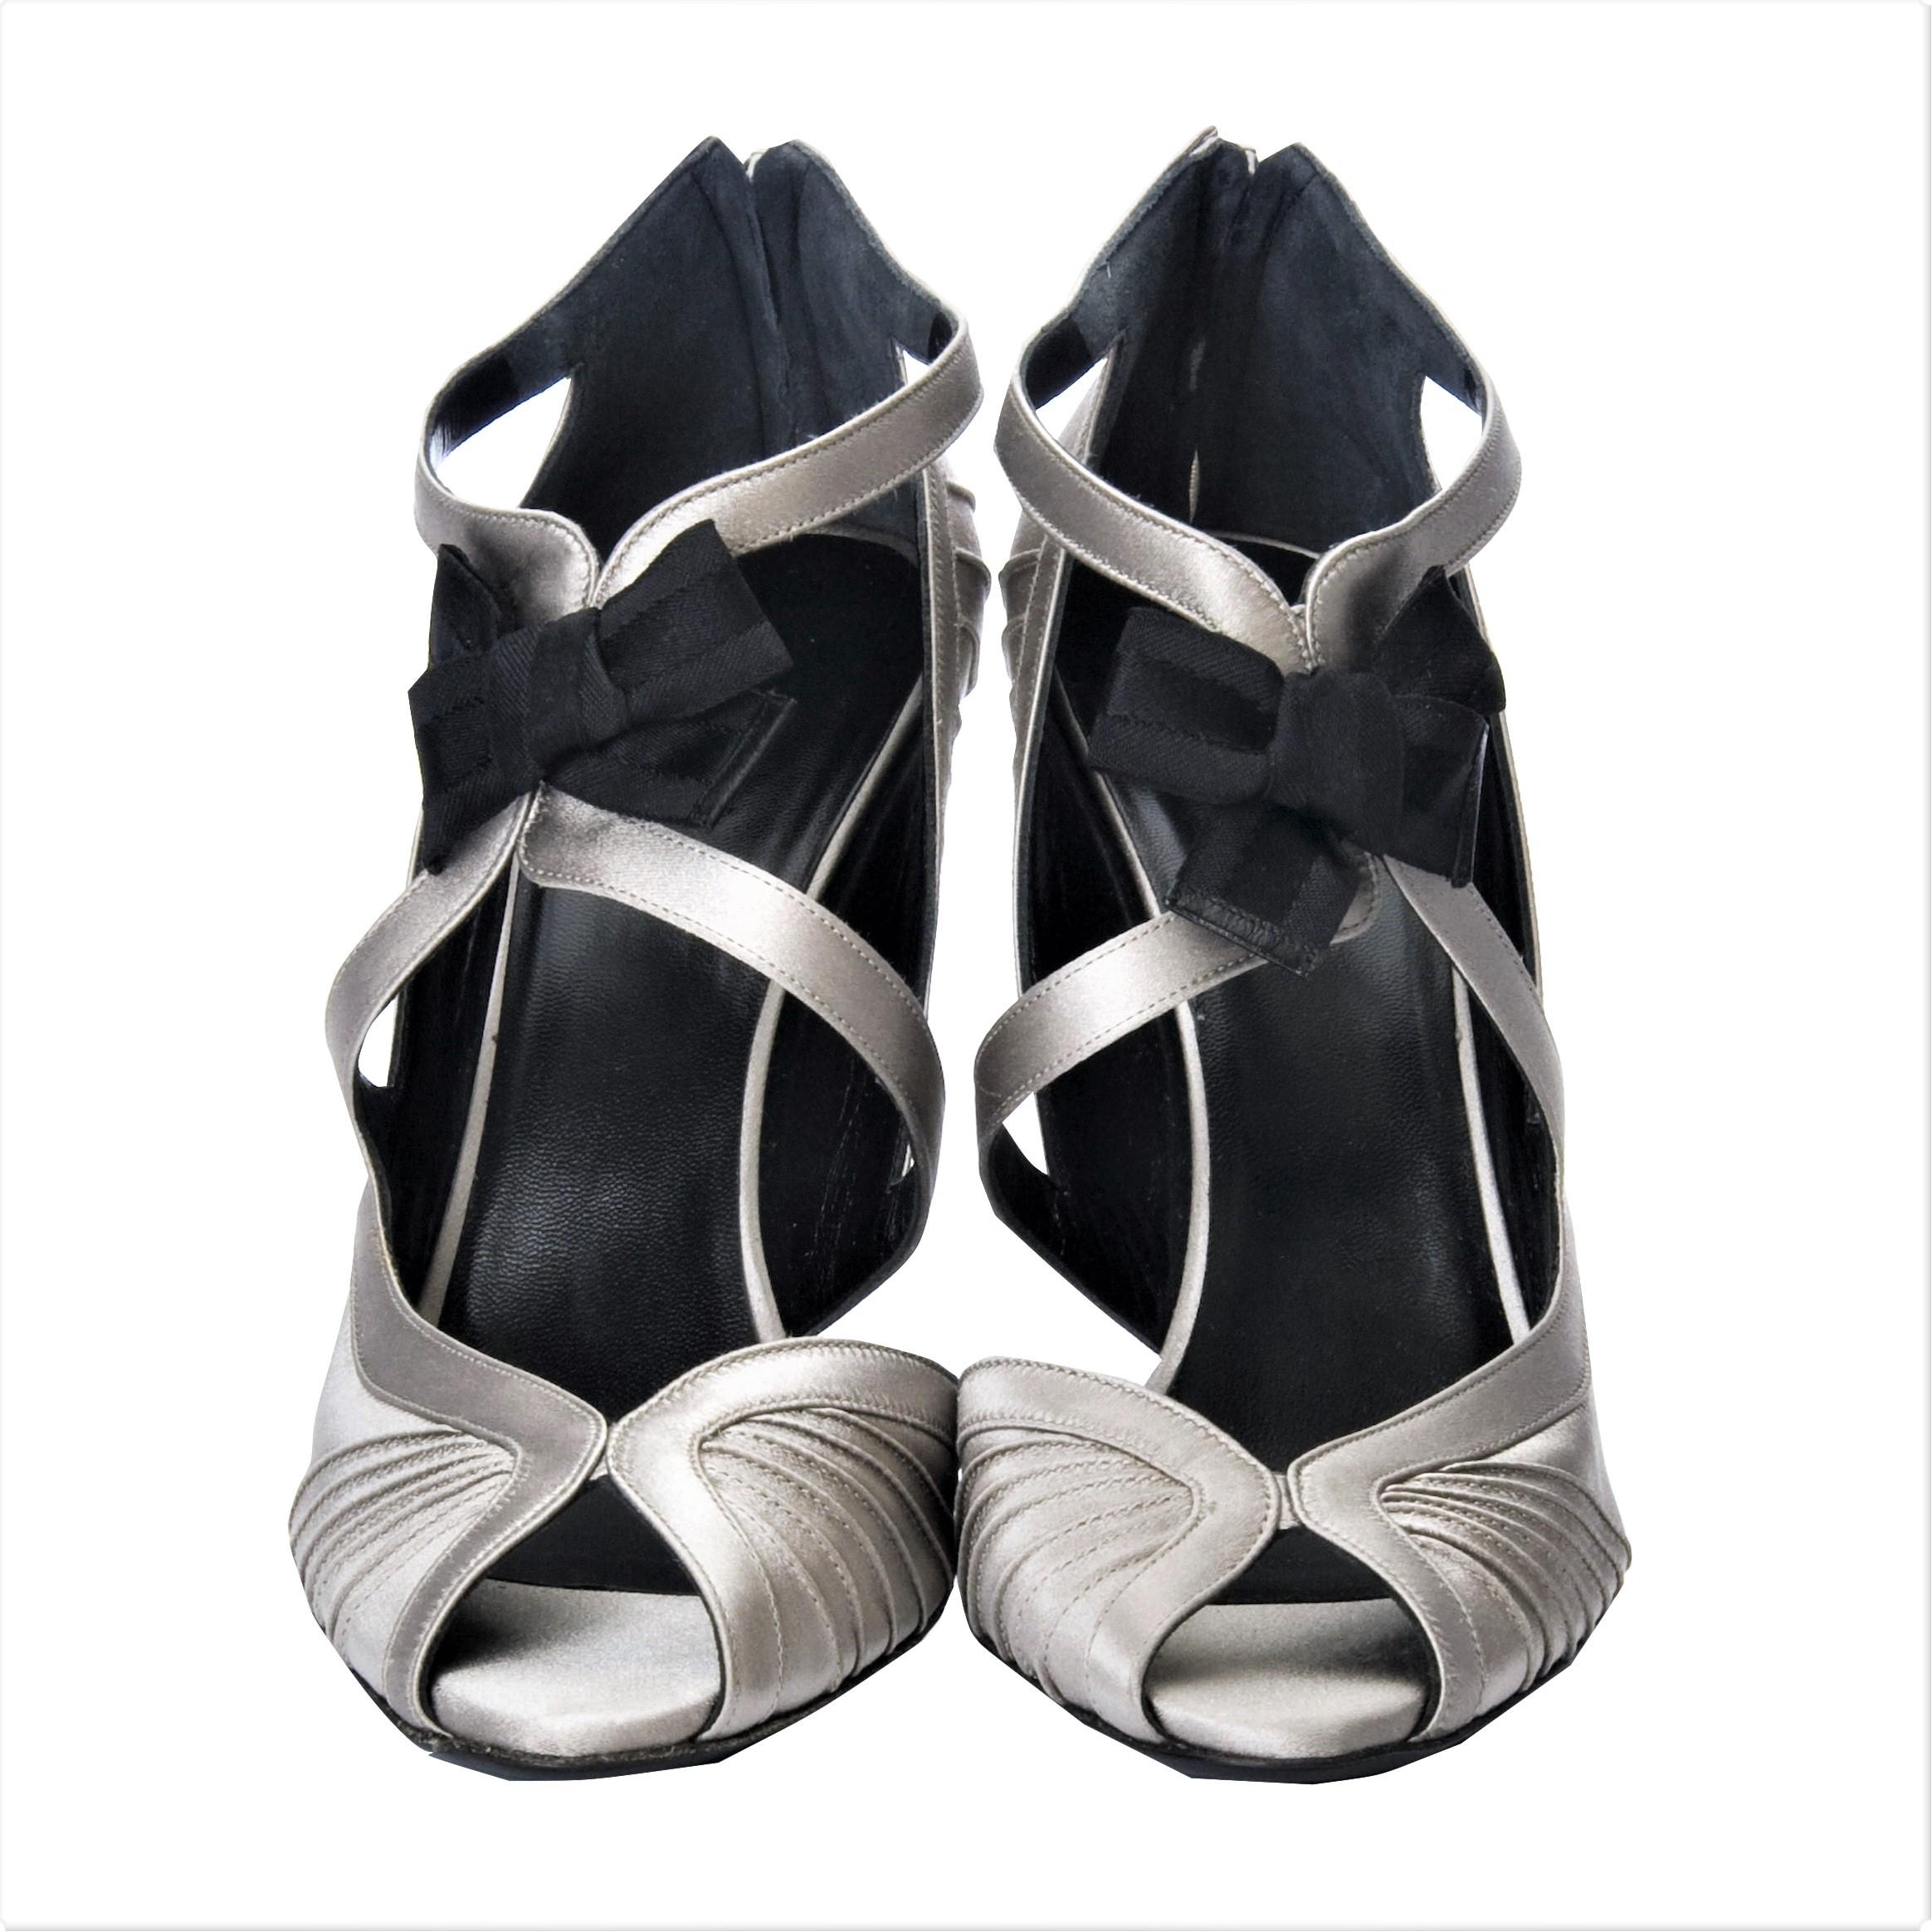 tom ford silver heels